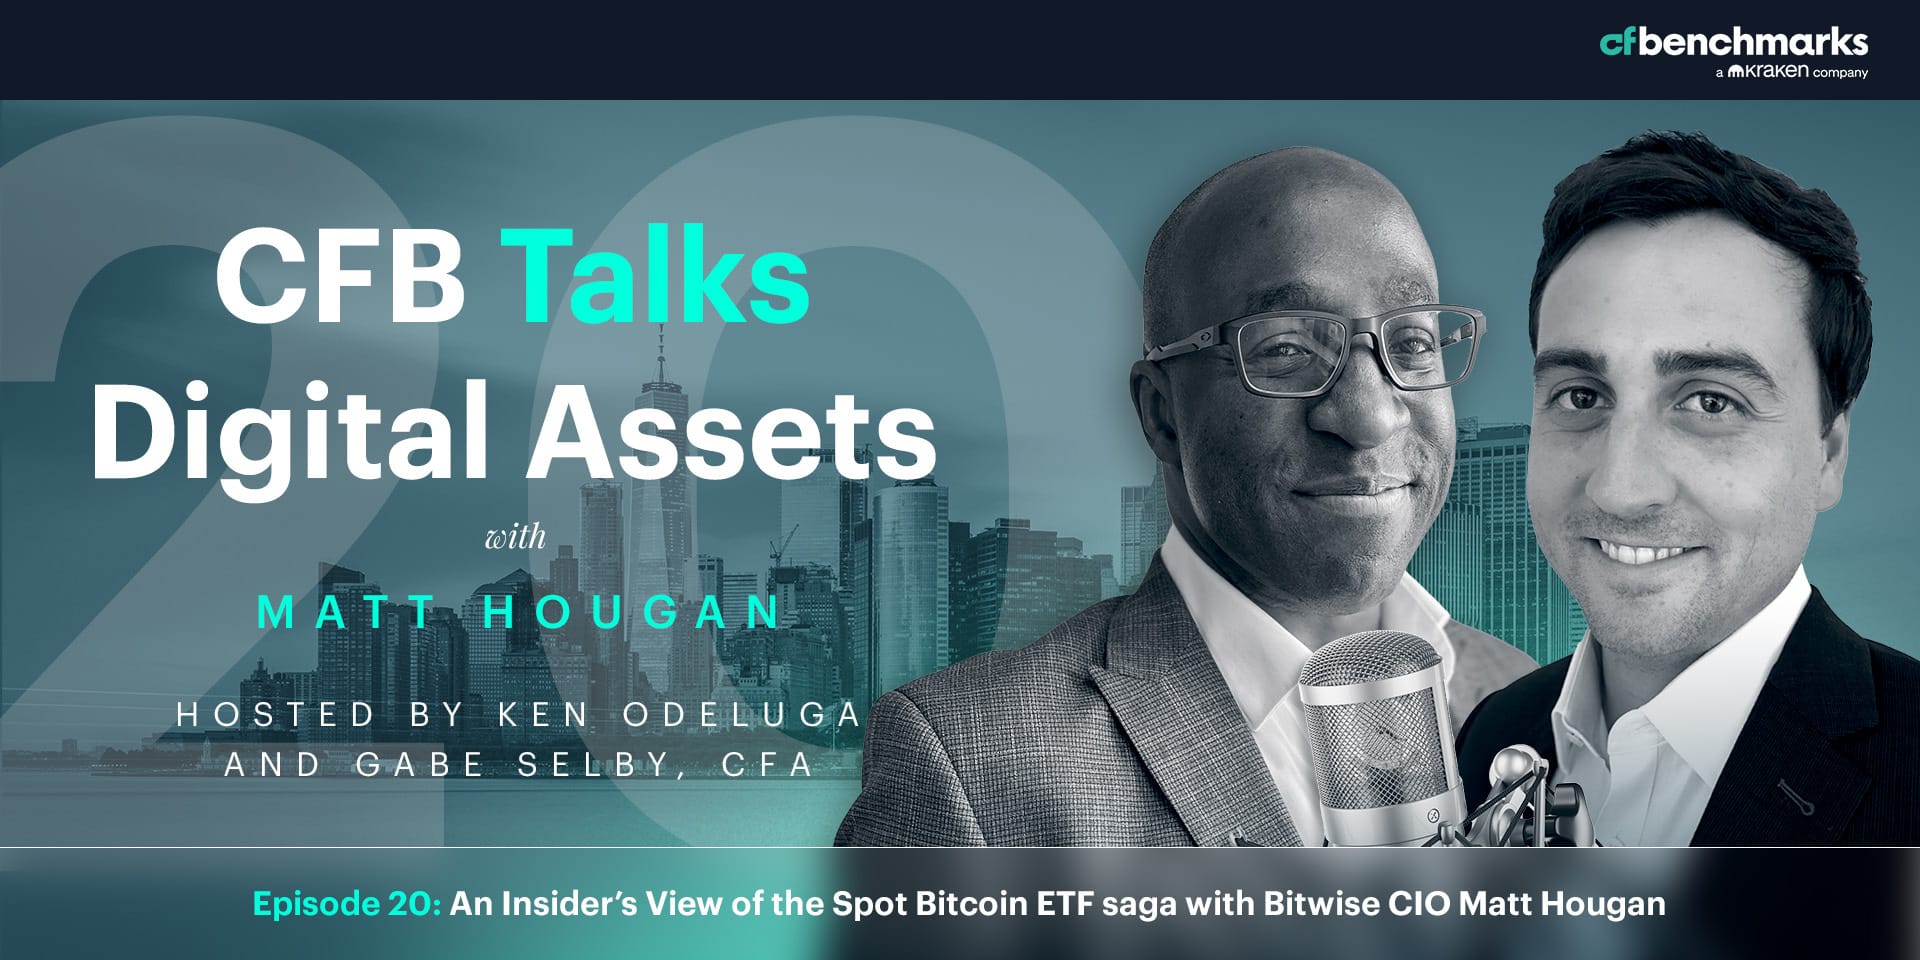 CFB Talks Digital Assets Episode 20: An Insider’s View of the Spot Bitcoin ETF saga with Bitwise CIO Matt Hougan